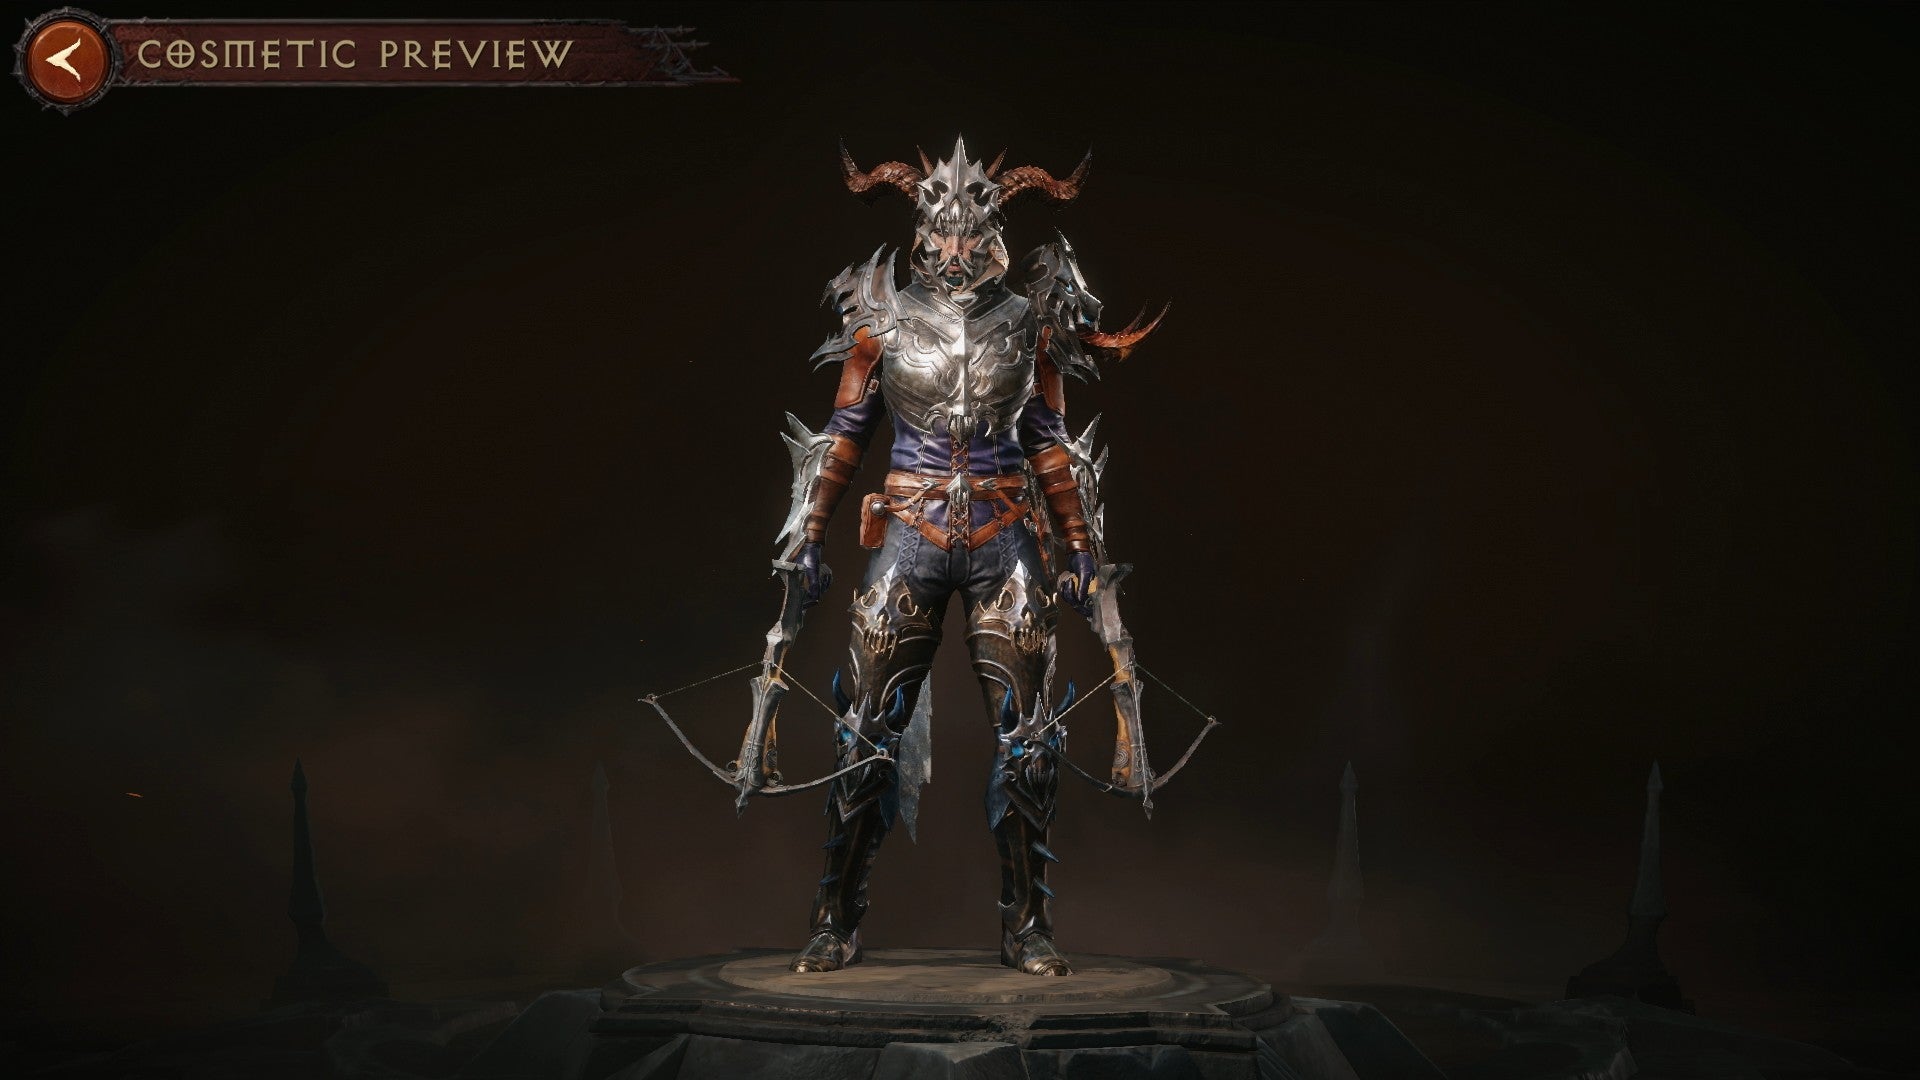 Diablo Immortal Demon Hunter wearing a default legendary gear preview set while wielding two crossbows